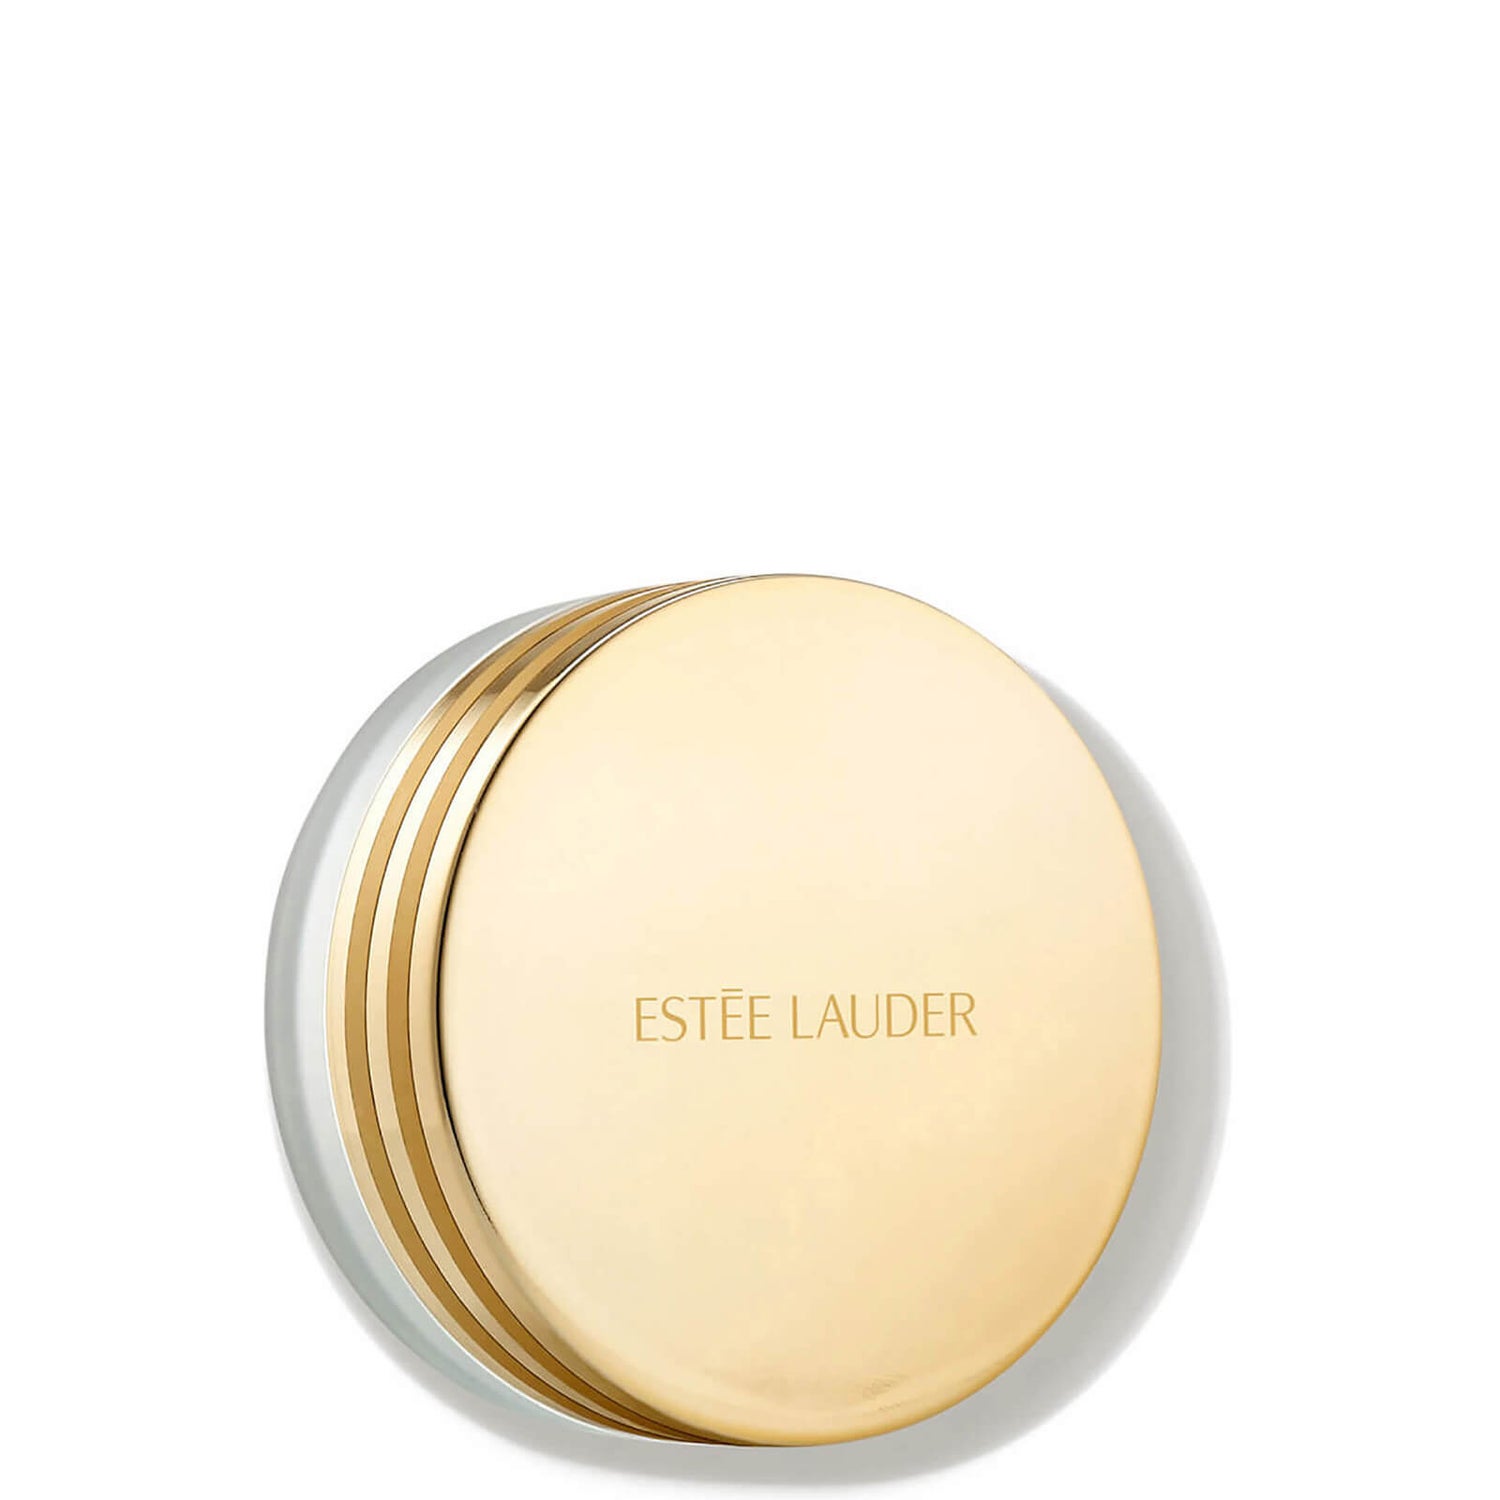 Estée Lauder Advanced Night Micro Cleansing Balm 70 ml